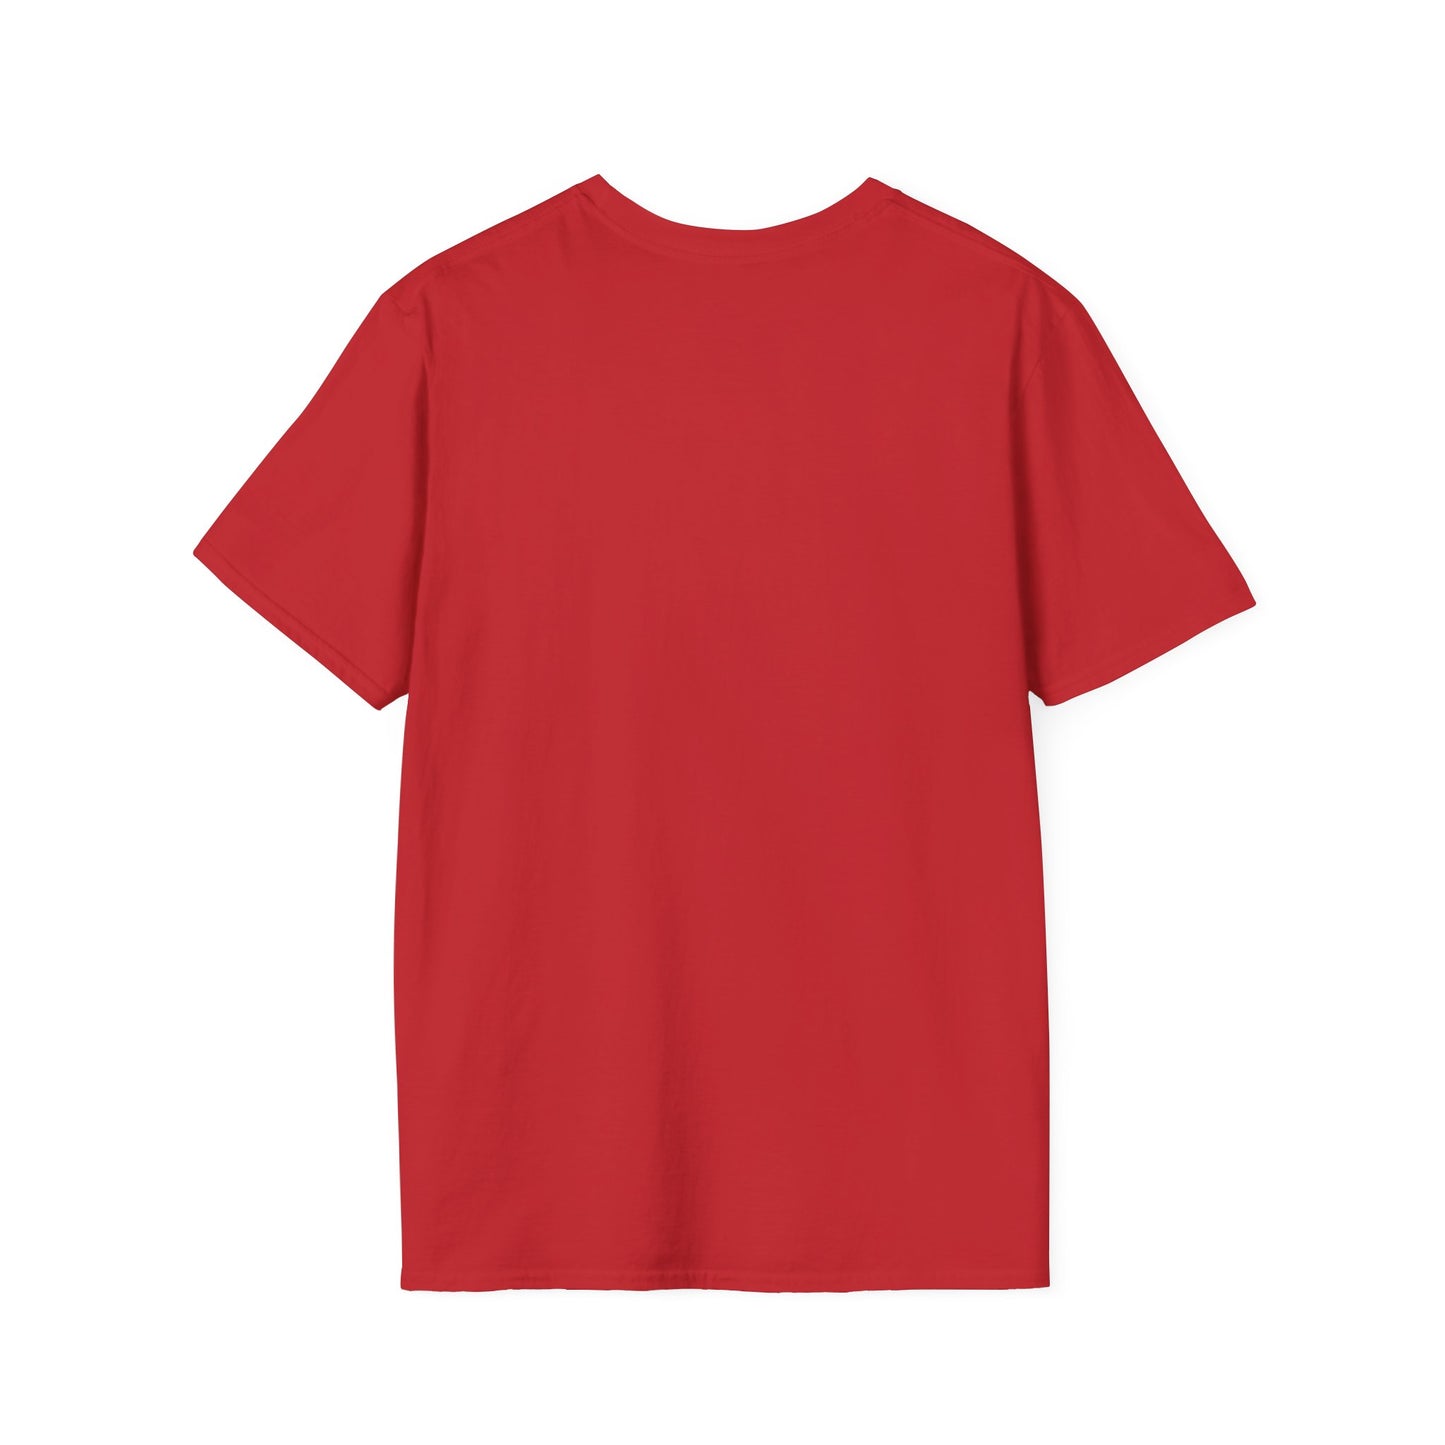 Toronto Ontario Cordinates Unisex Softstyle T-Shirt